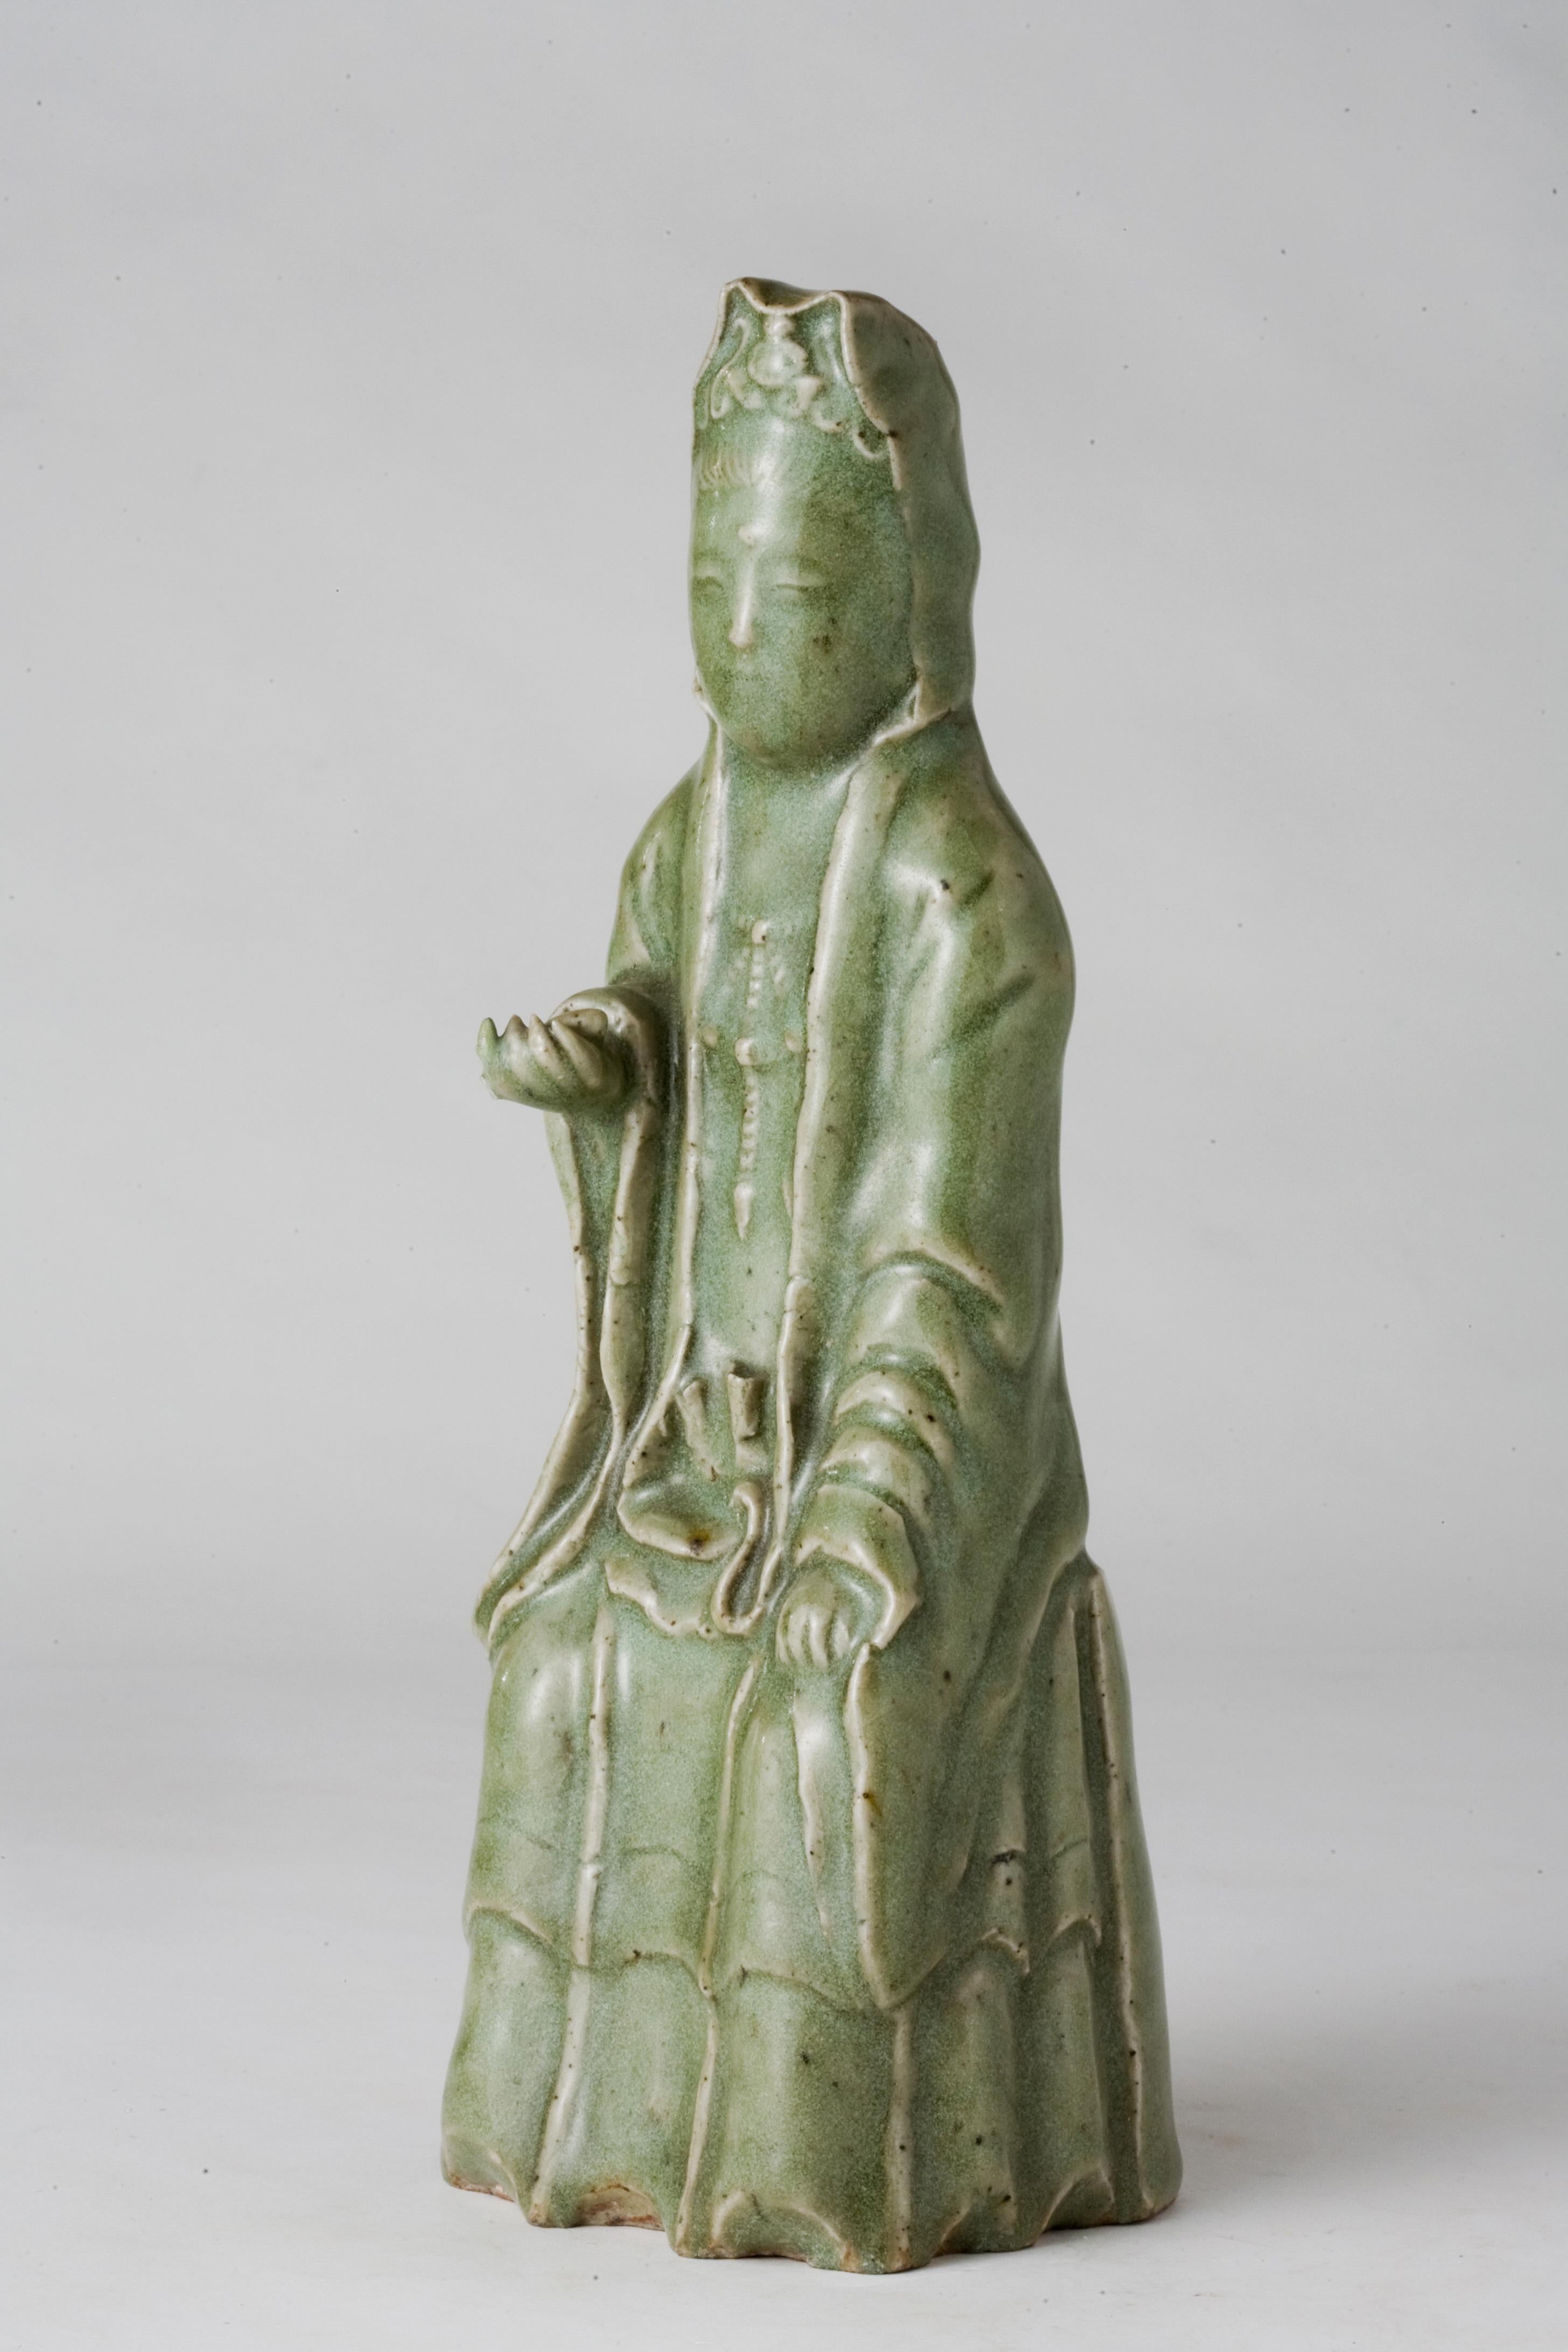 Longquan Celadon Figurine, Ming Dynasty (1368-1644) For Sale 4